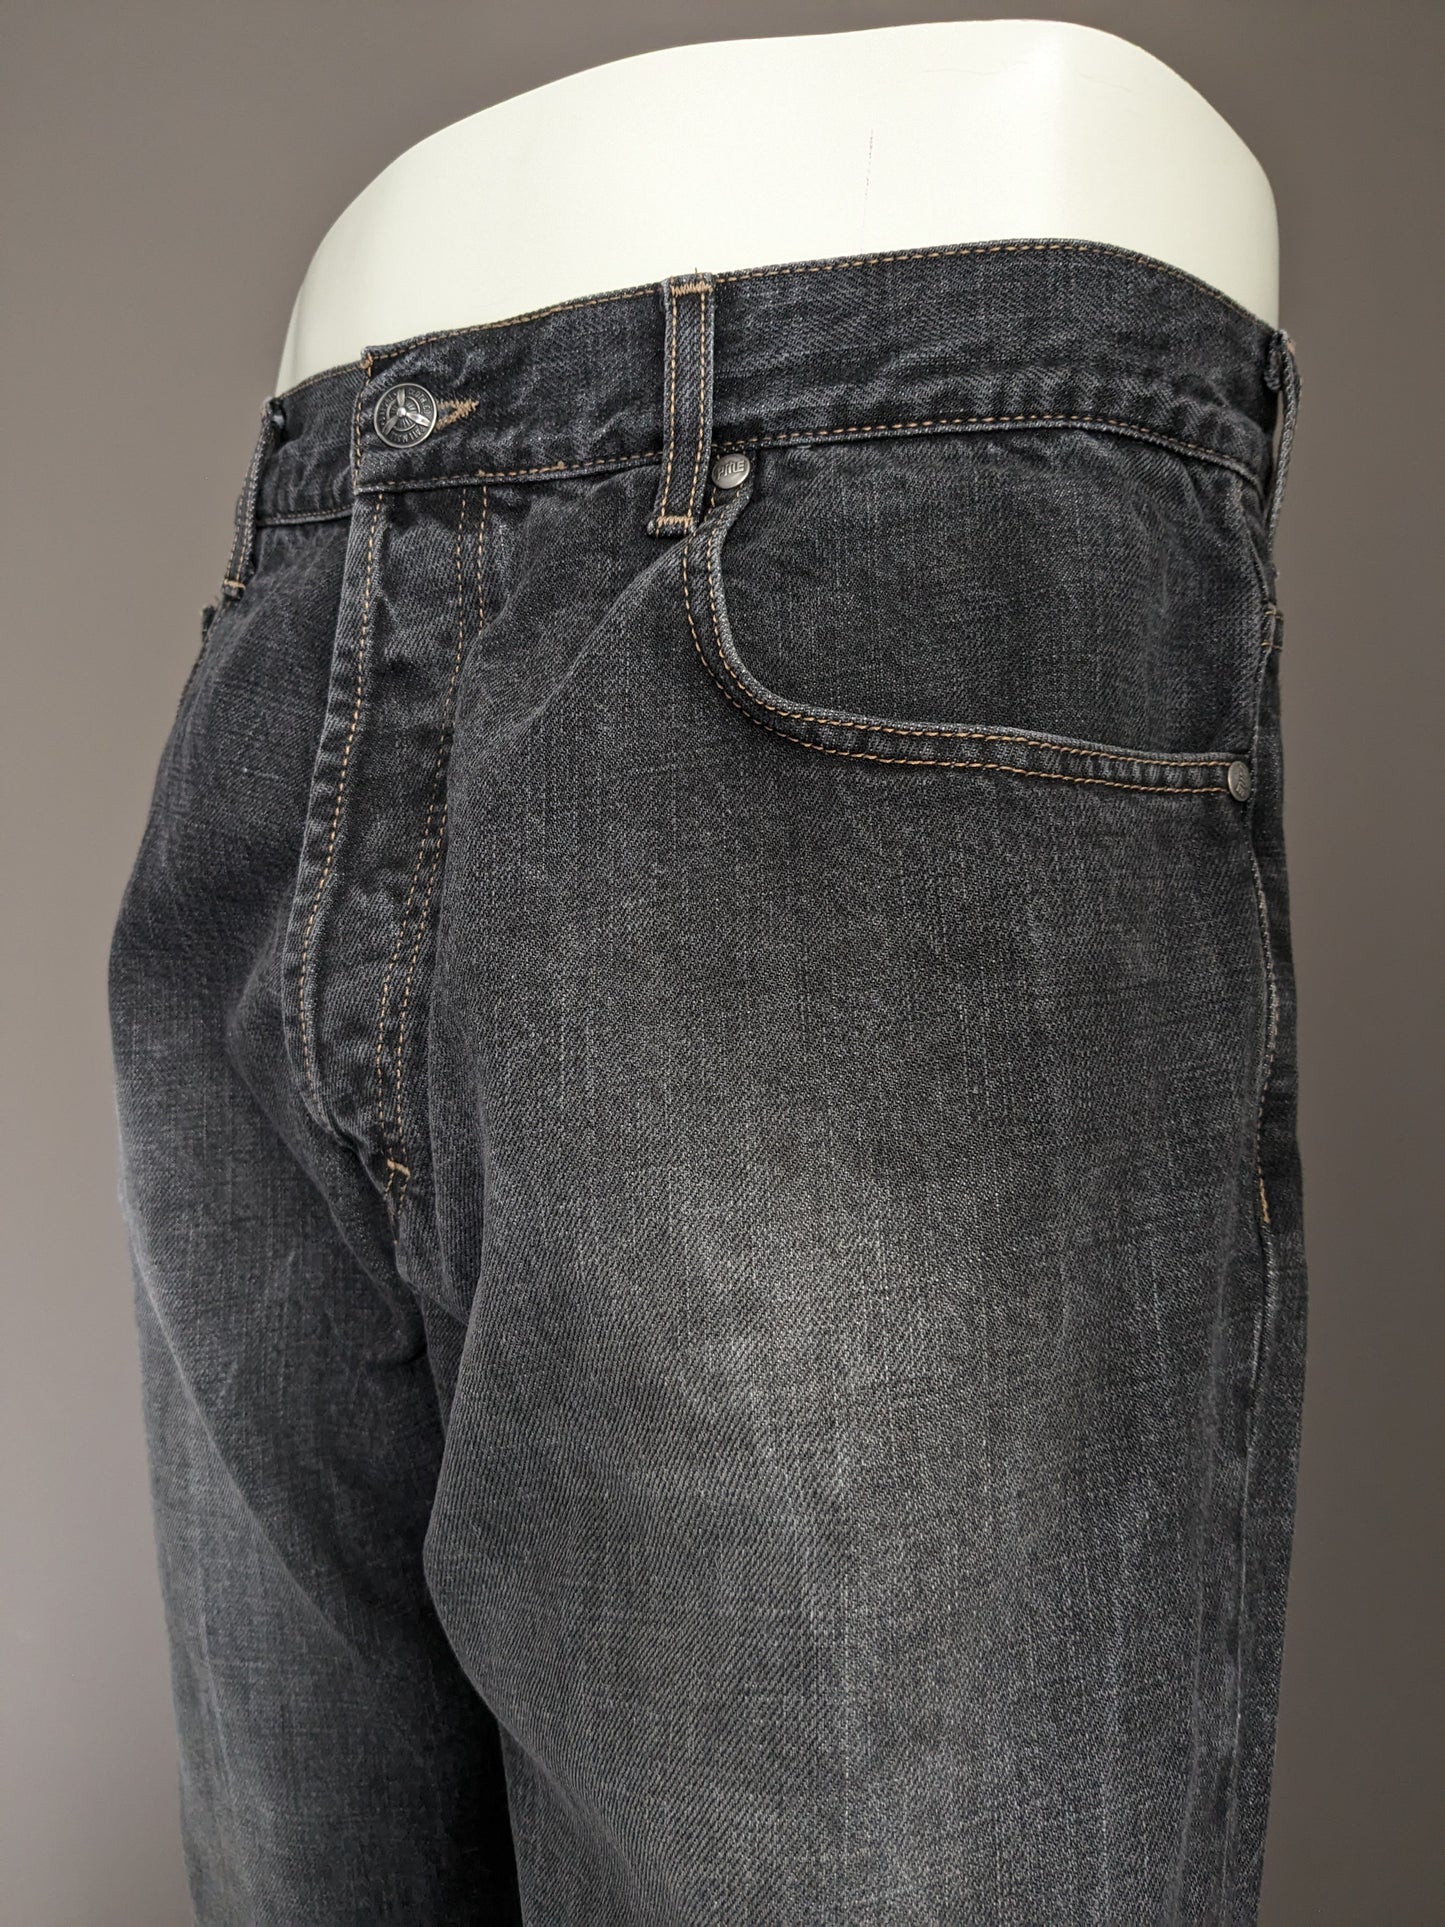 PME / Pall mall jeans. Black gray mixed. Size W36 - L32. Type "Dakota".